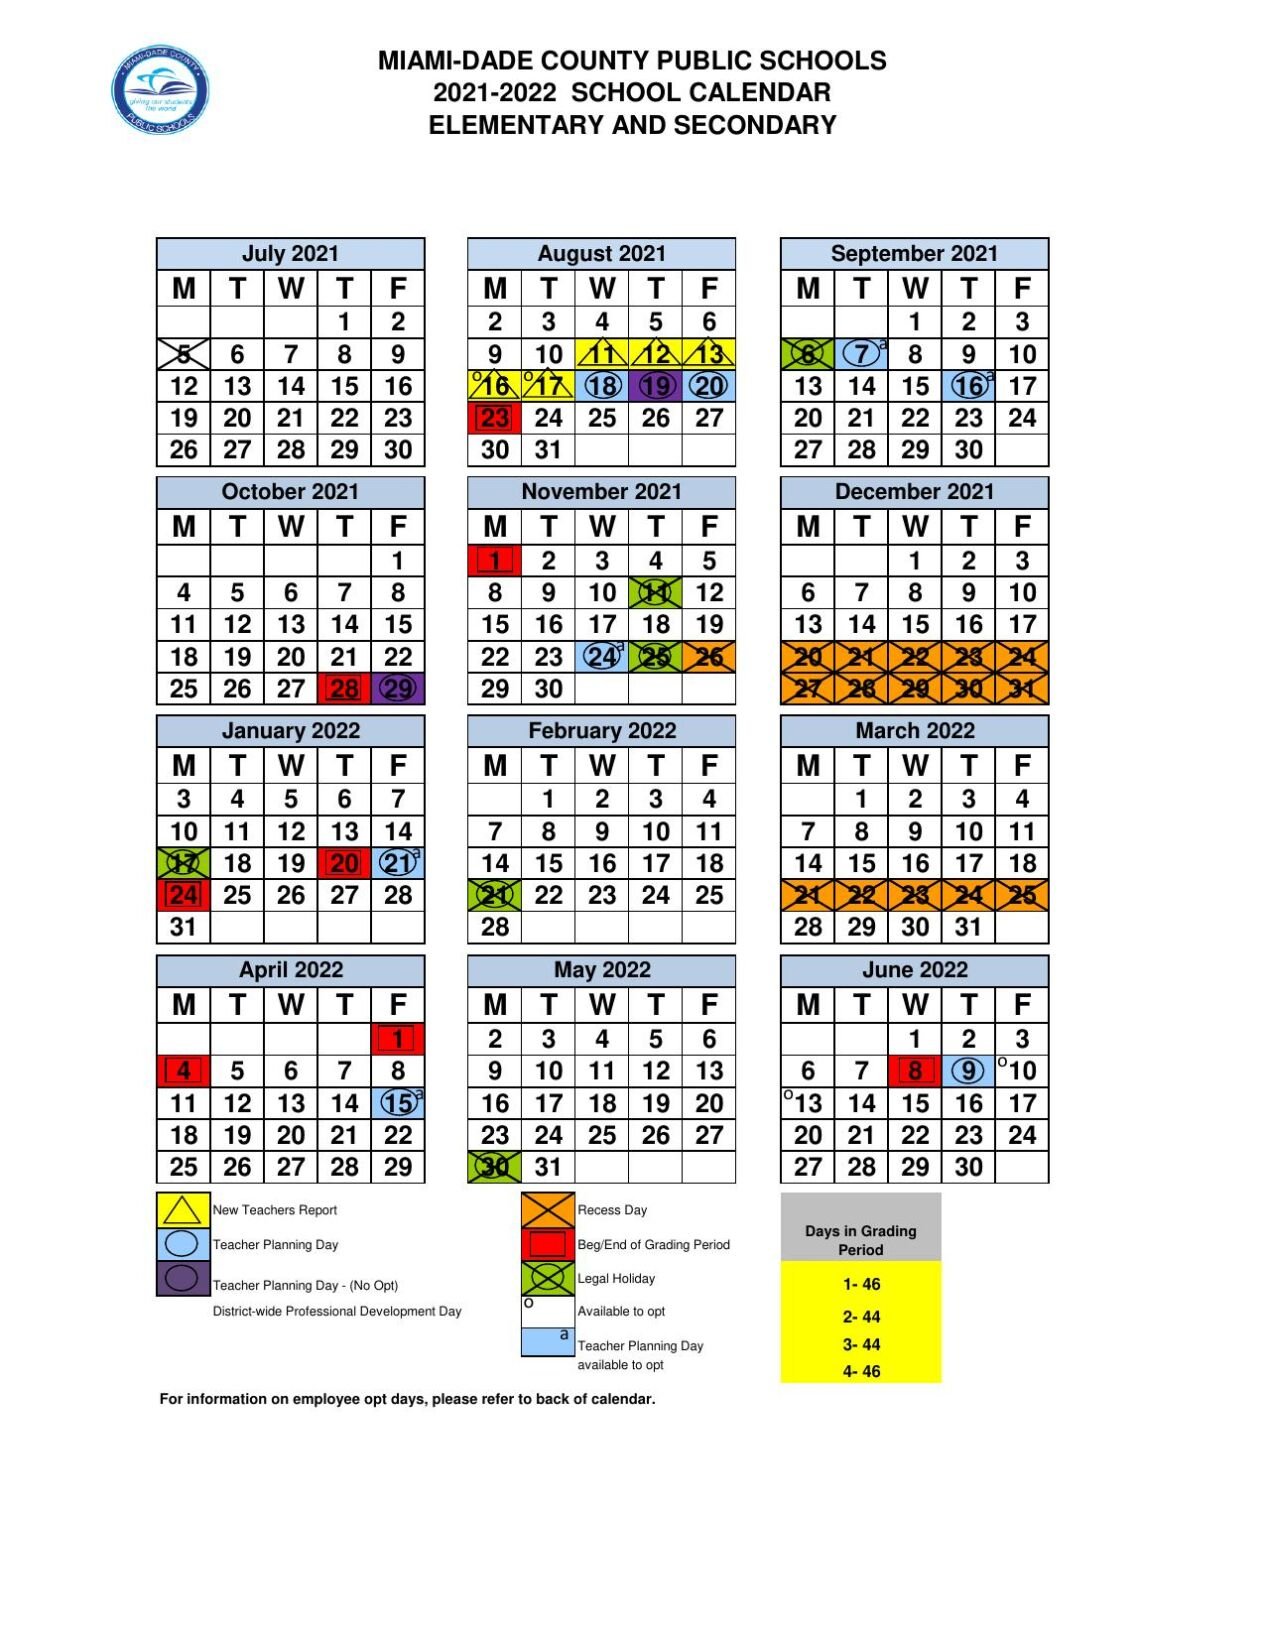 Miami Events Calendar 2022 Miami-Dade County Public Schools 2021-22 Calendar | Education |  Miamitimesonline.com